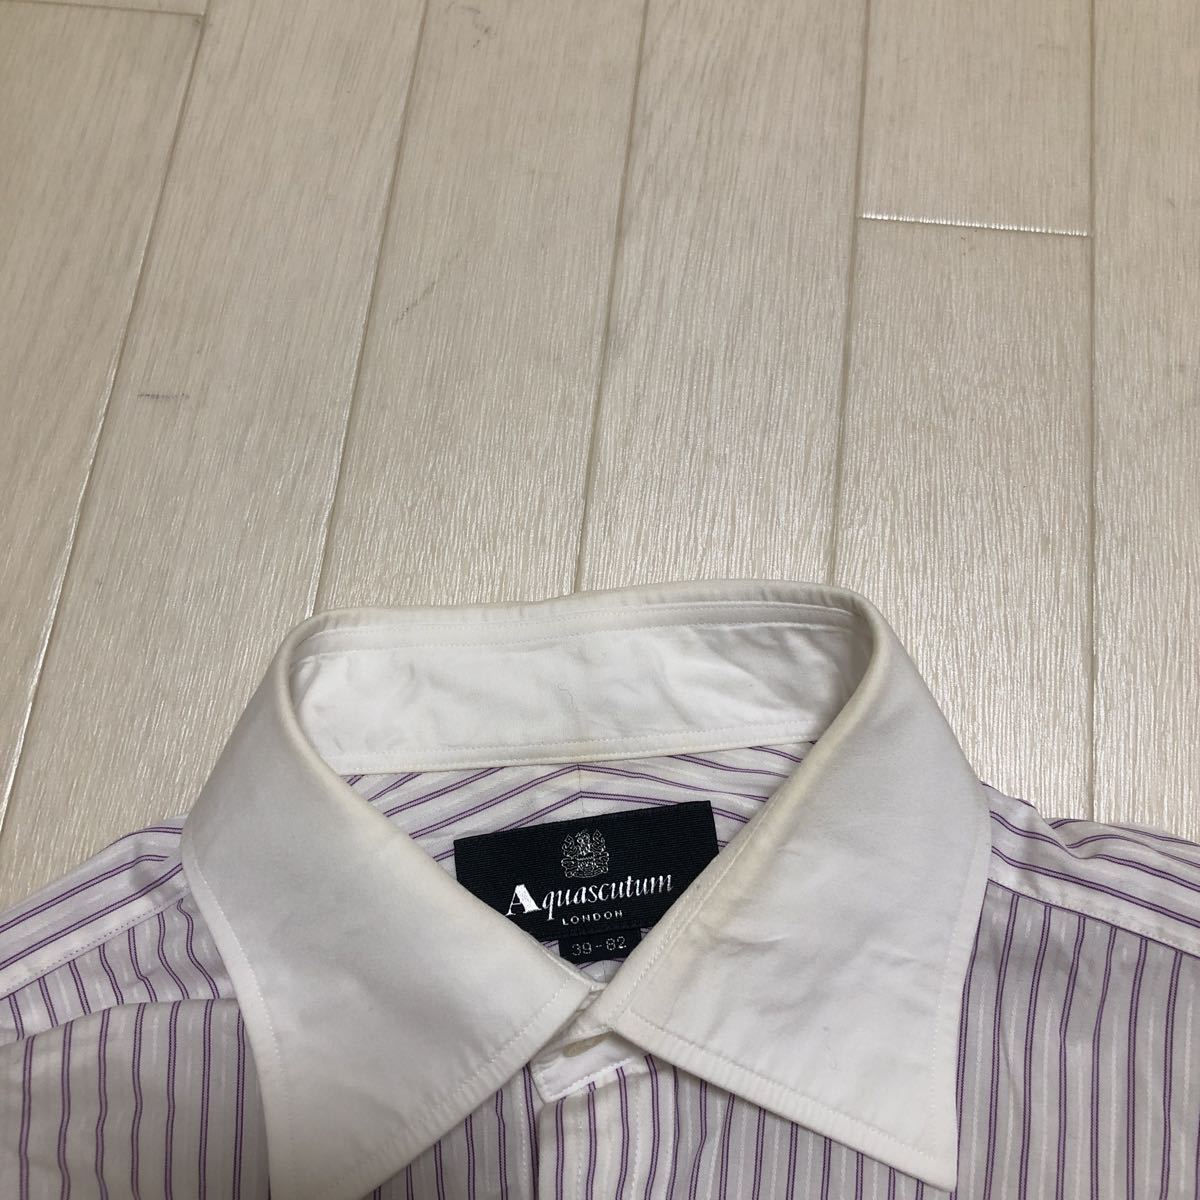  peace 49*① Aquascutum Aquascutum long sleeve button shirt k relic shirt stripe 39-82 men's white purple 